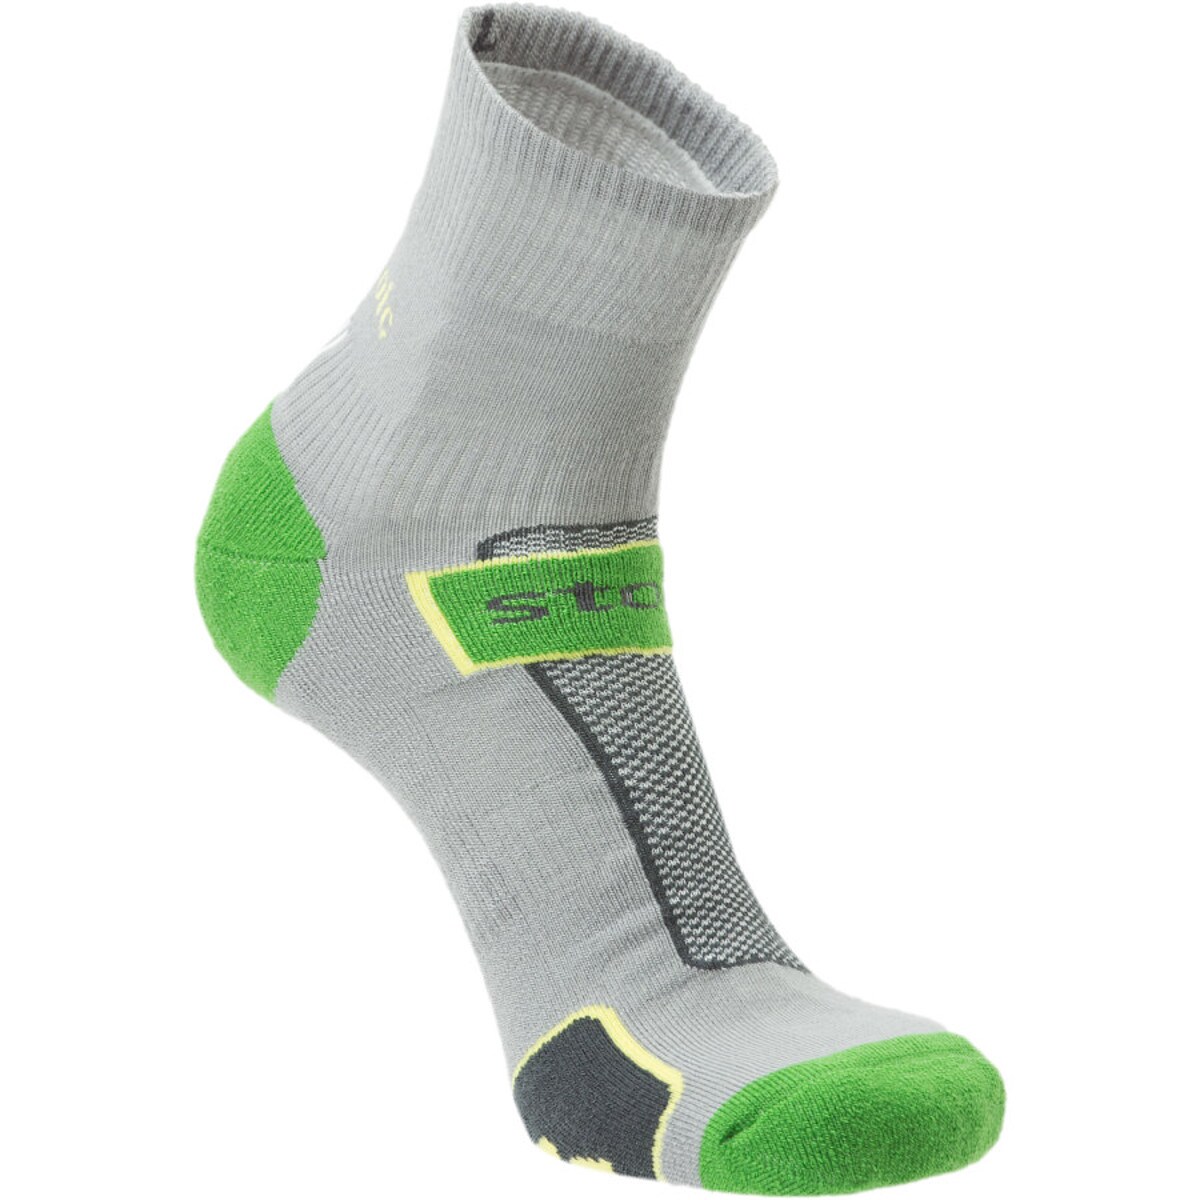 Stoic Merino Comp Trail Sock - 3-Pack | Backcountry.com